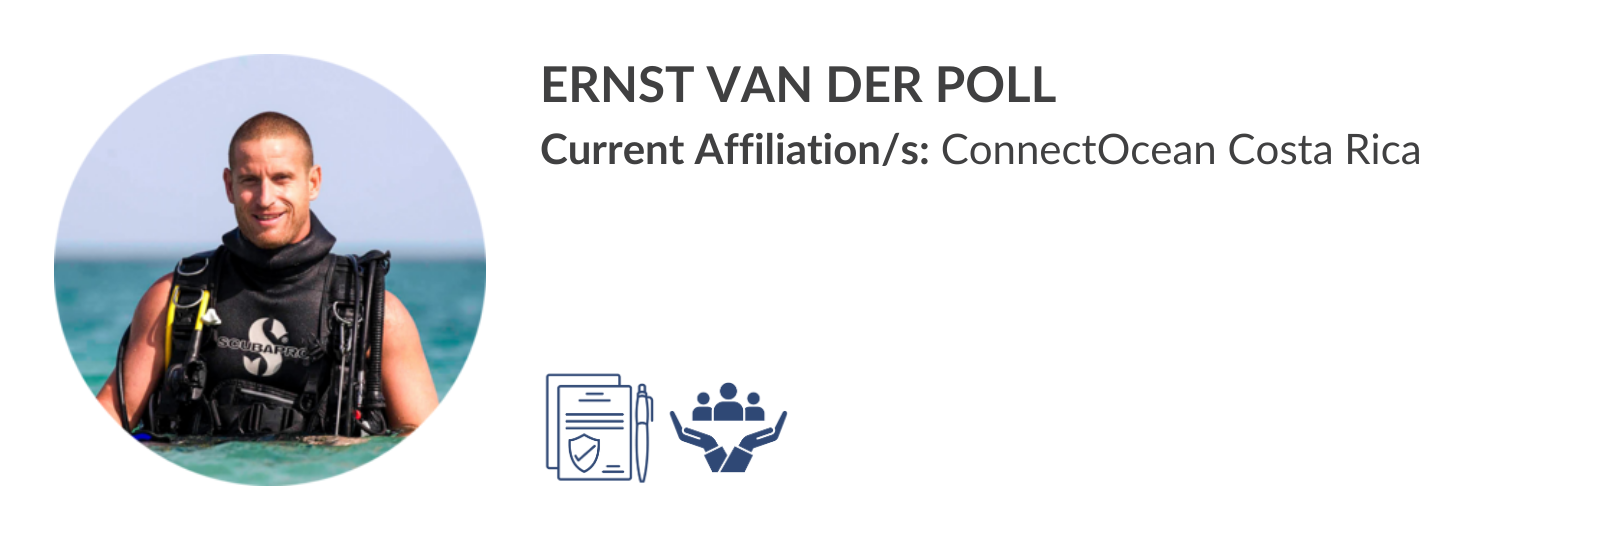 Ernst Van Der Poll.png